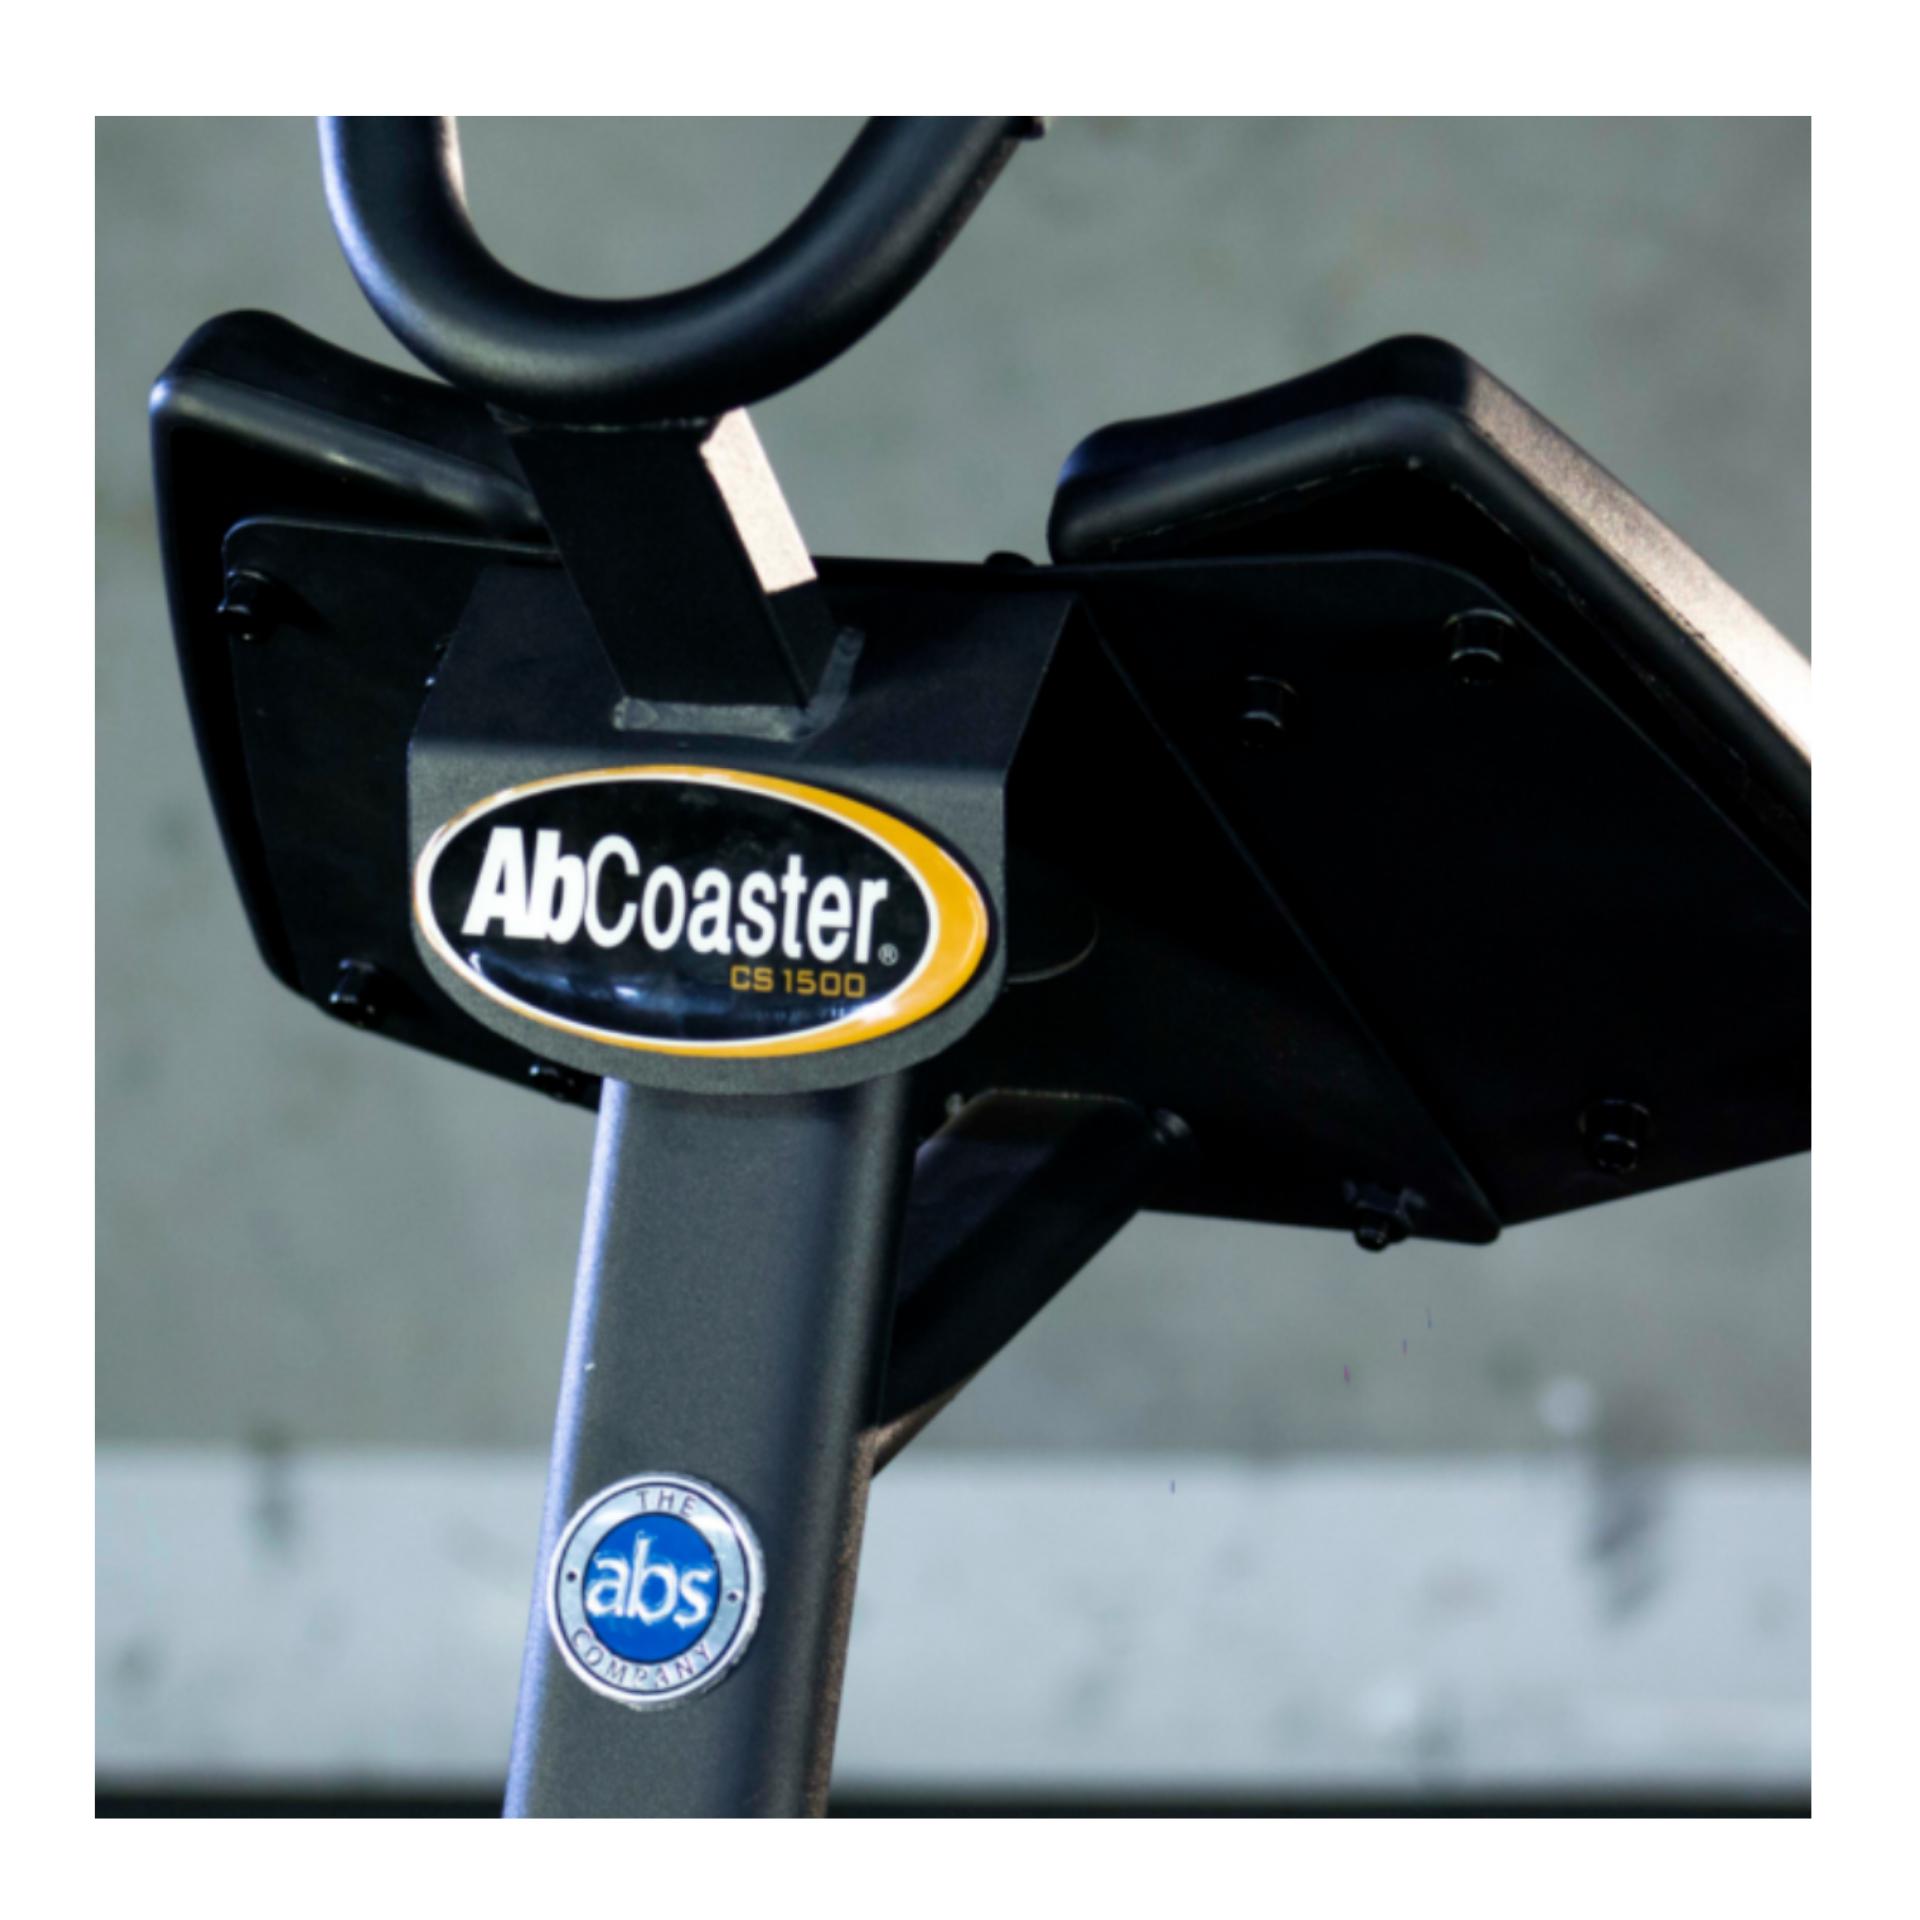 The Abs Company AB Coaster CS1500 black front logo on machine